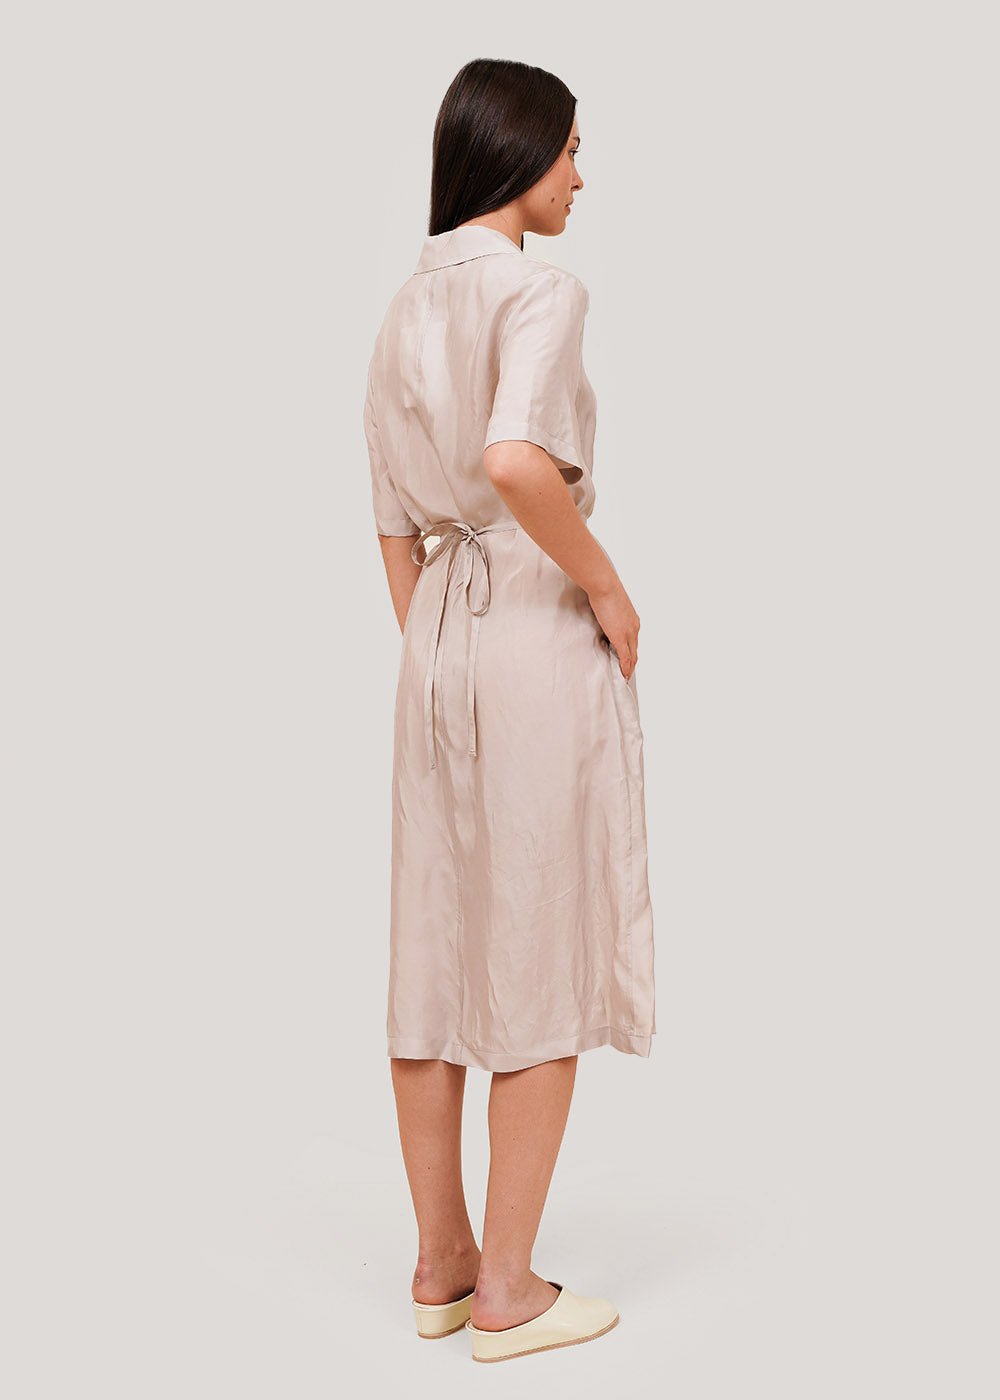 AMOMENTO Beige Cupra Shirt Dress - New Classics Studios Sustainable Ethical Fashion Canada